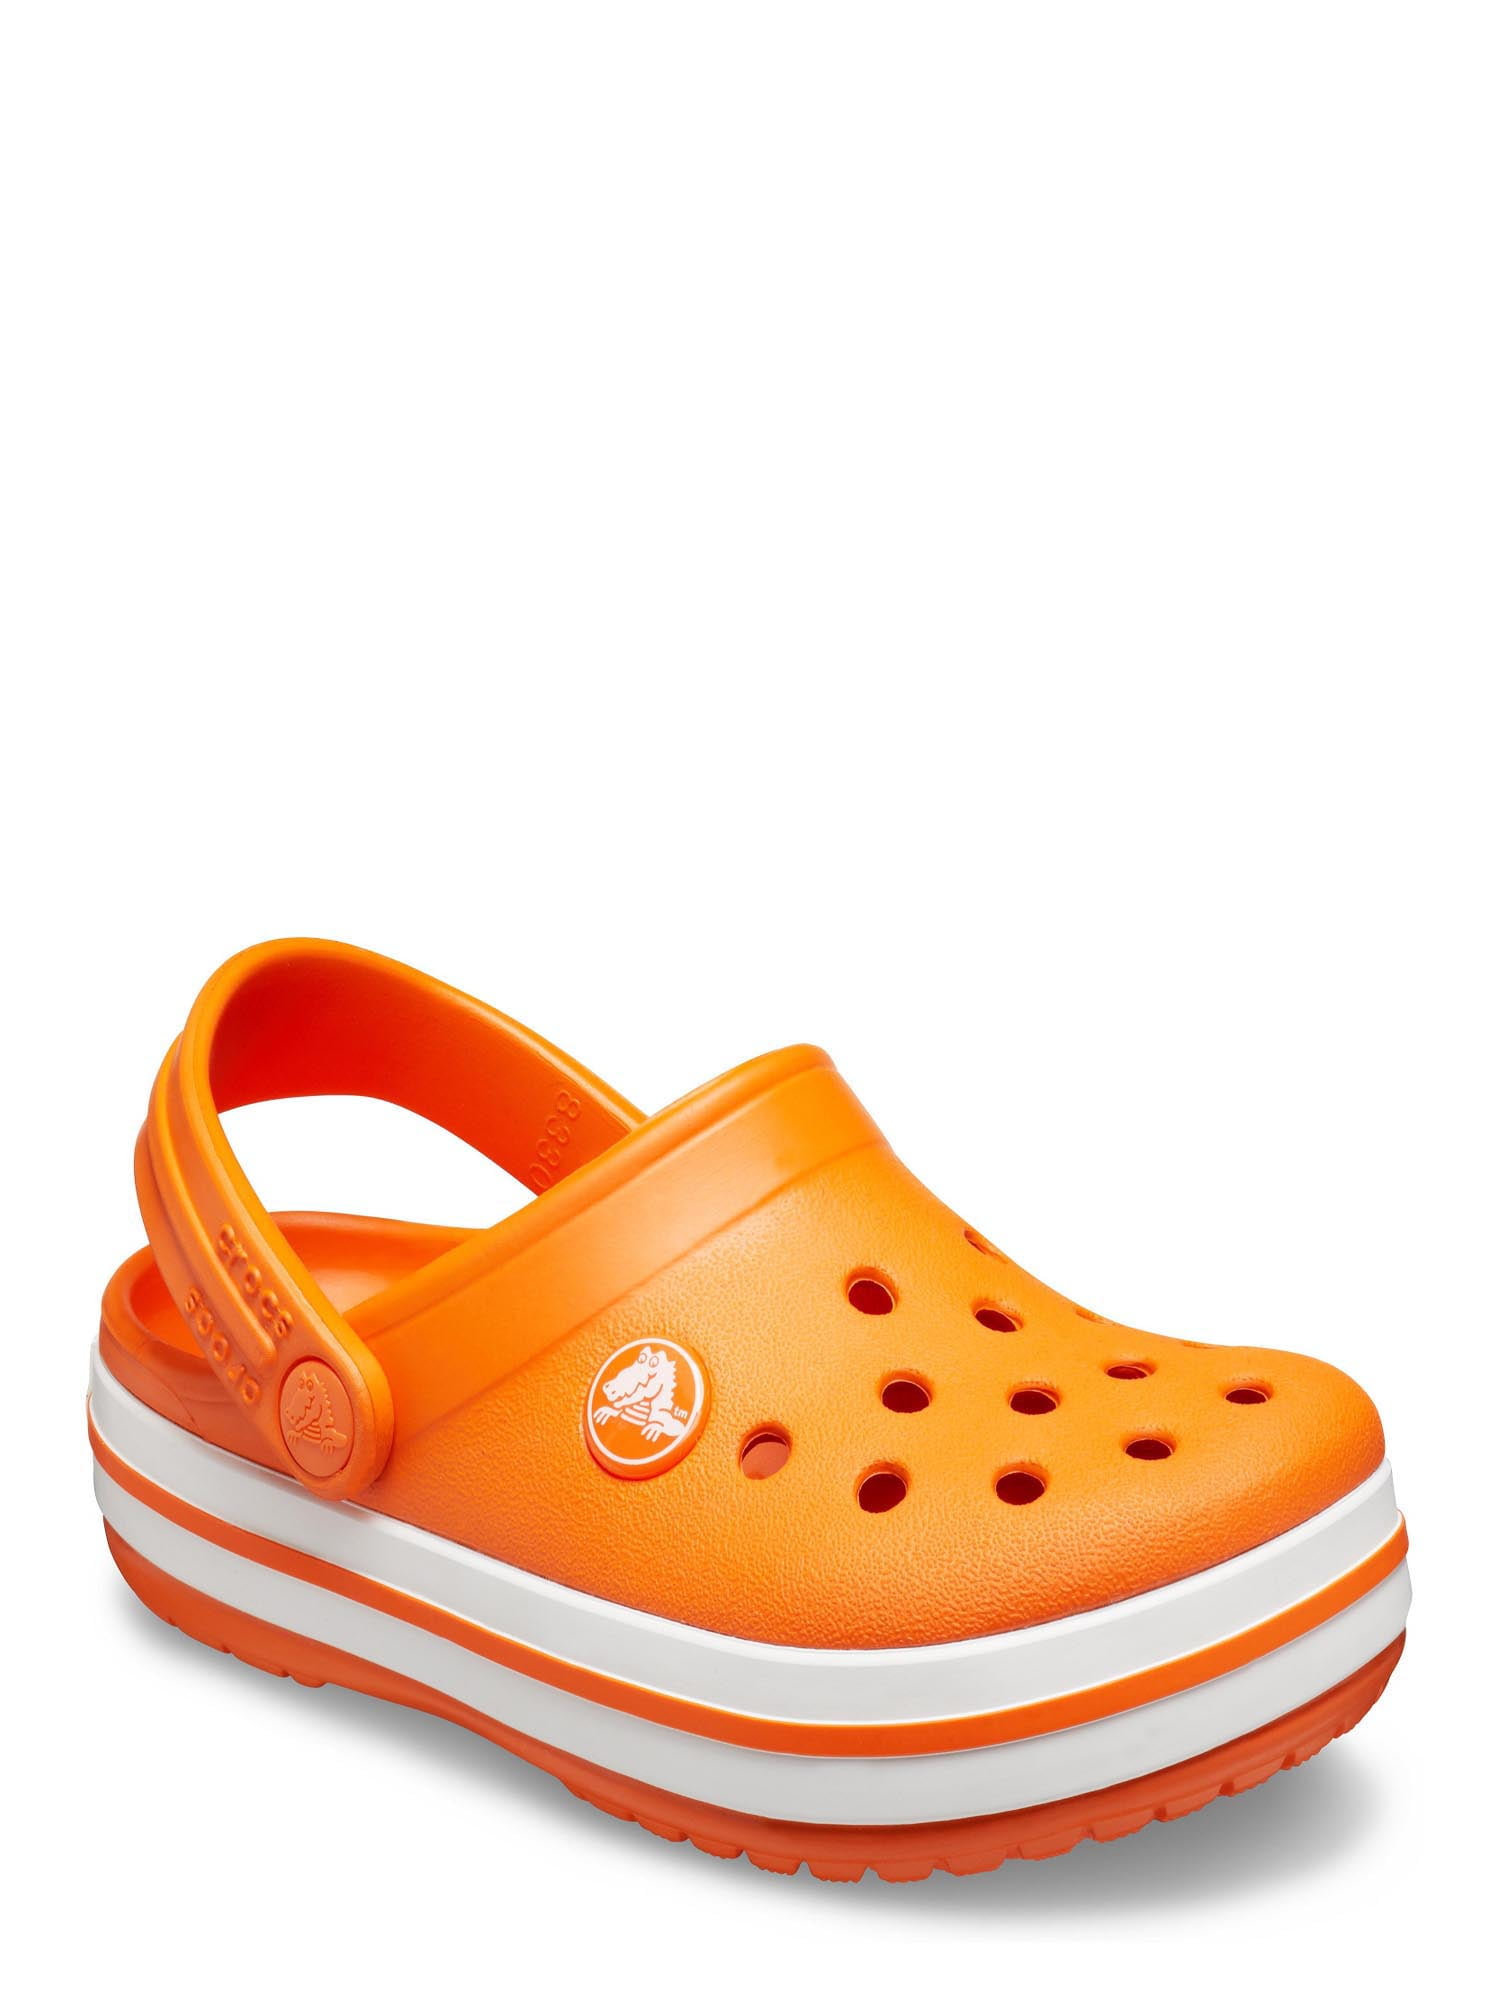 Orange Crocs Kids \u0026 Baby Shoes 